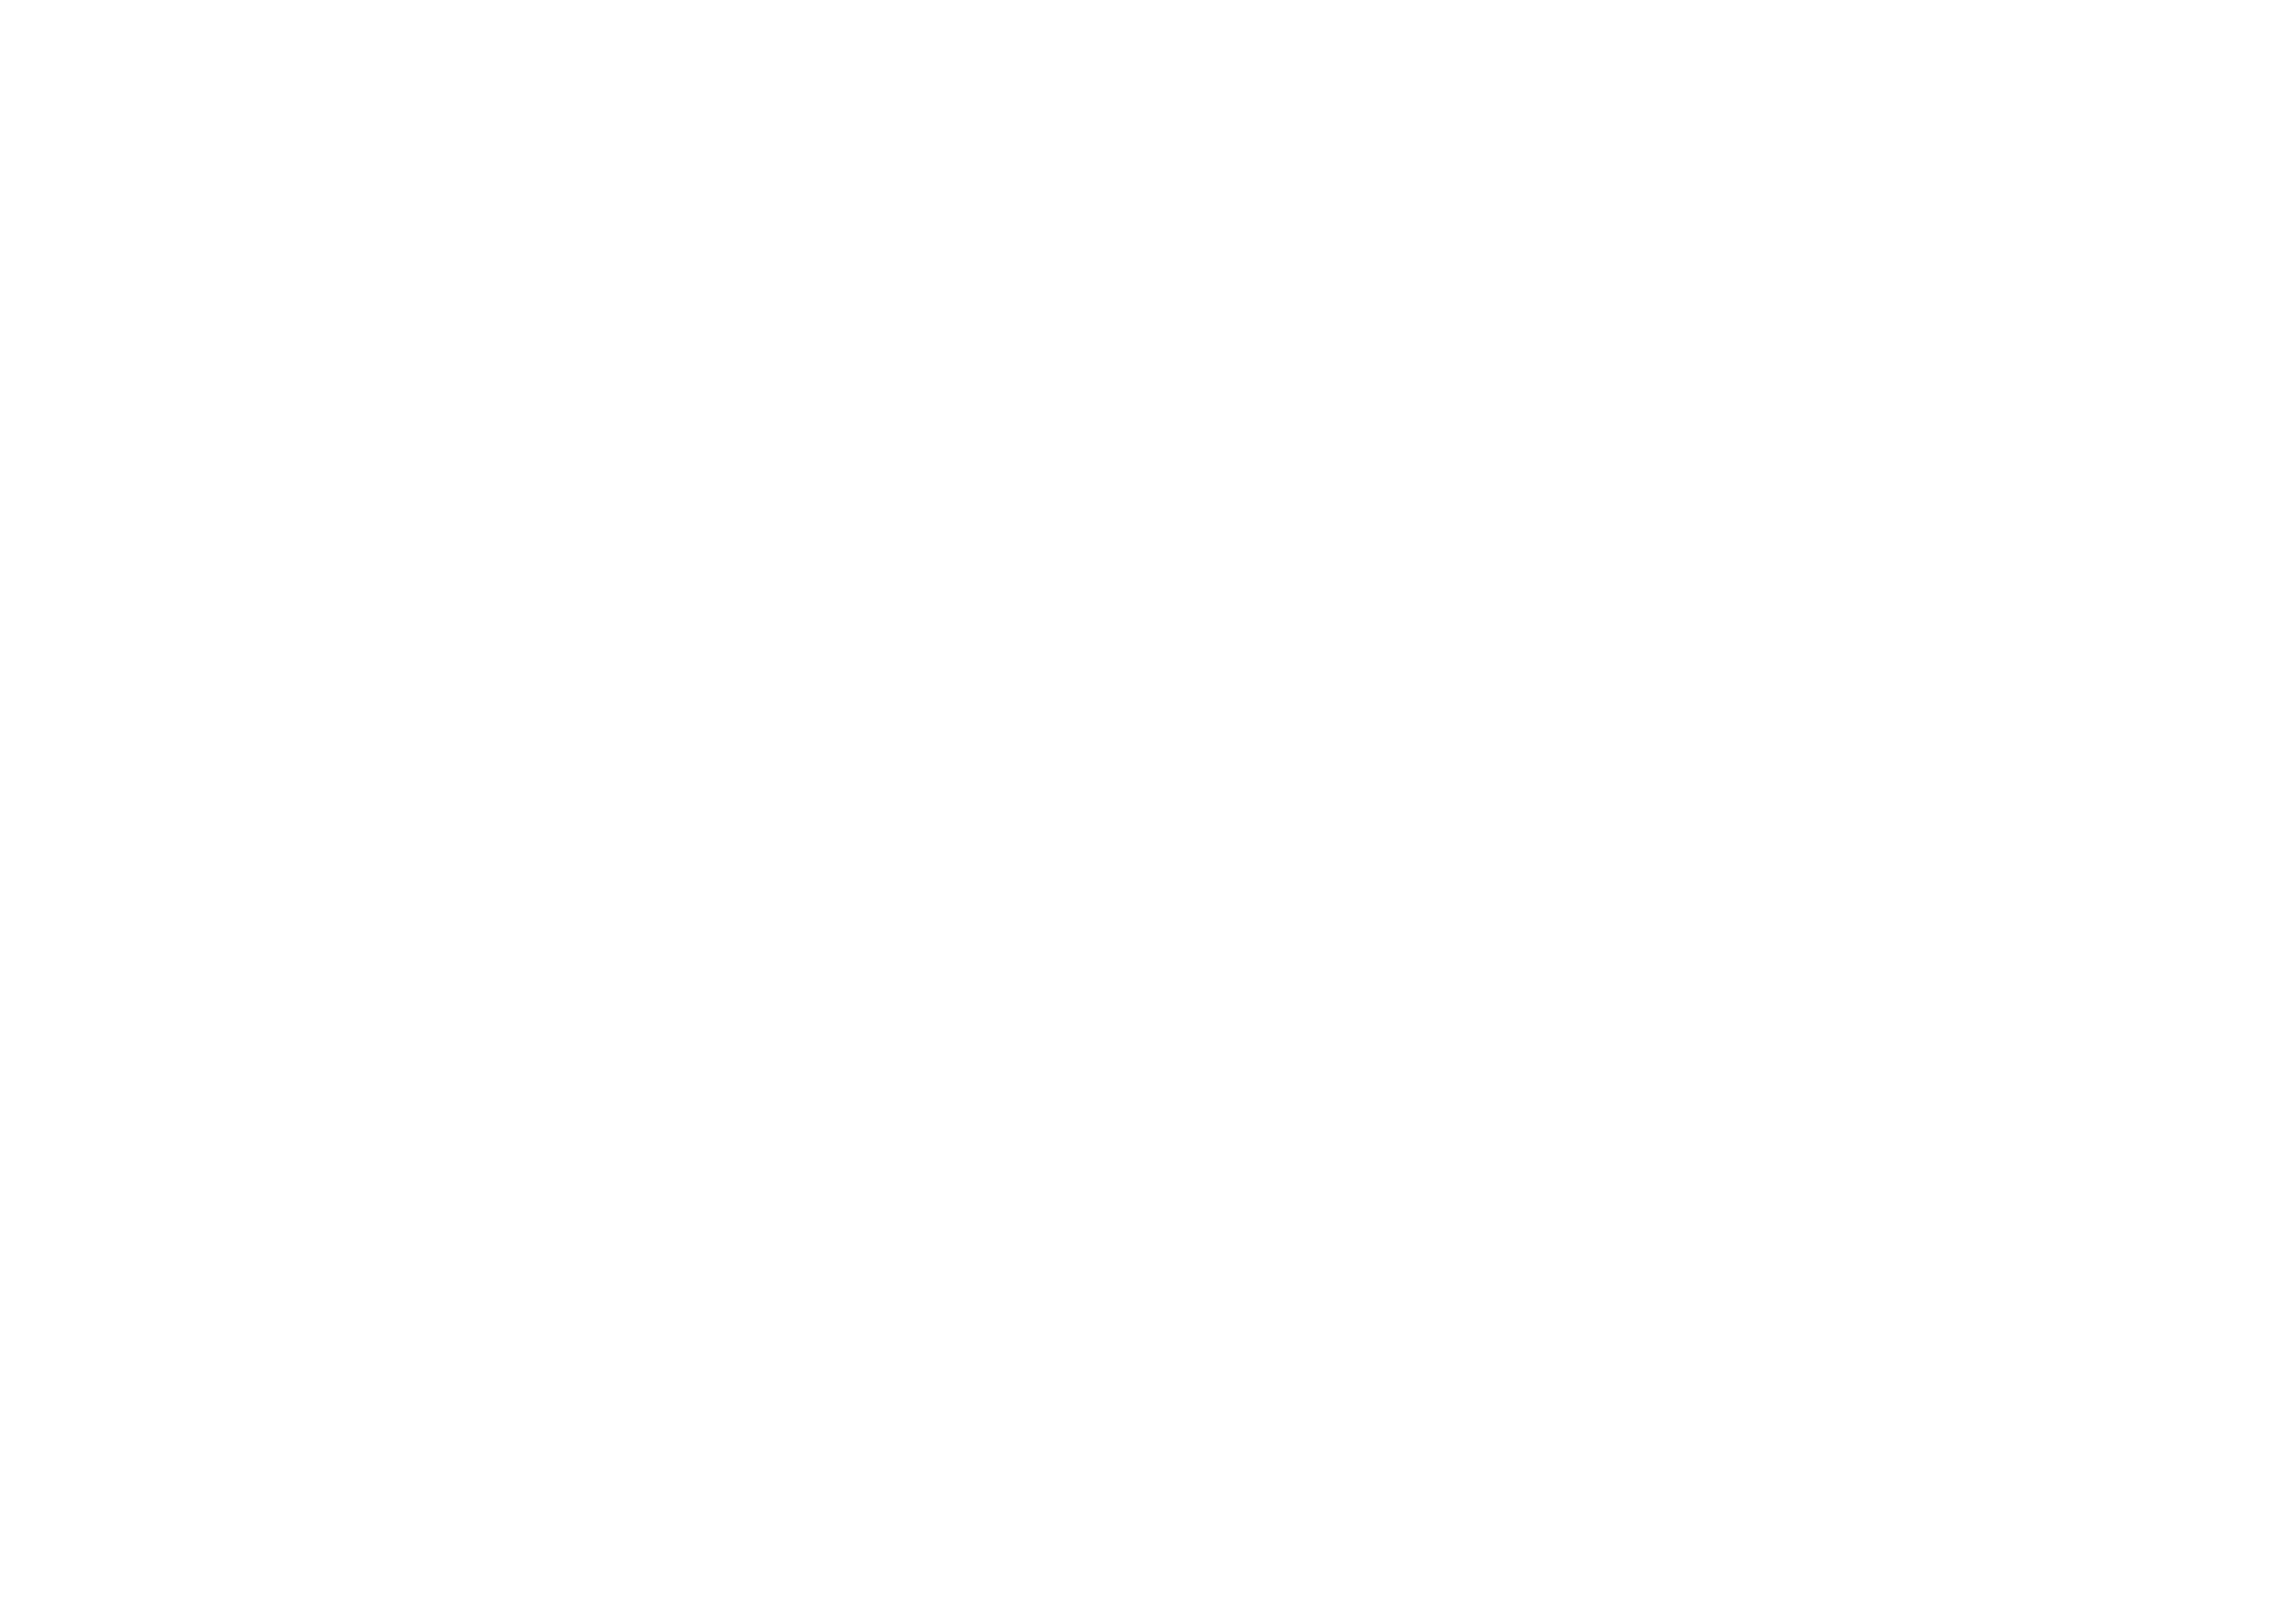 Certix group